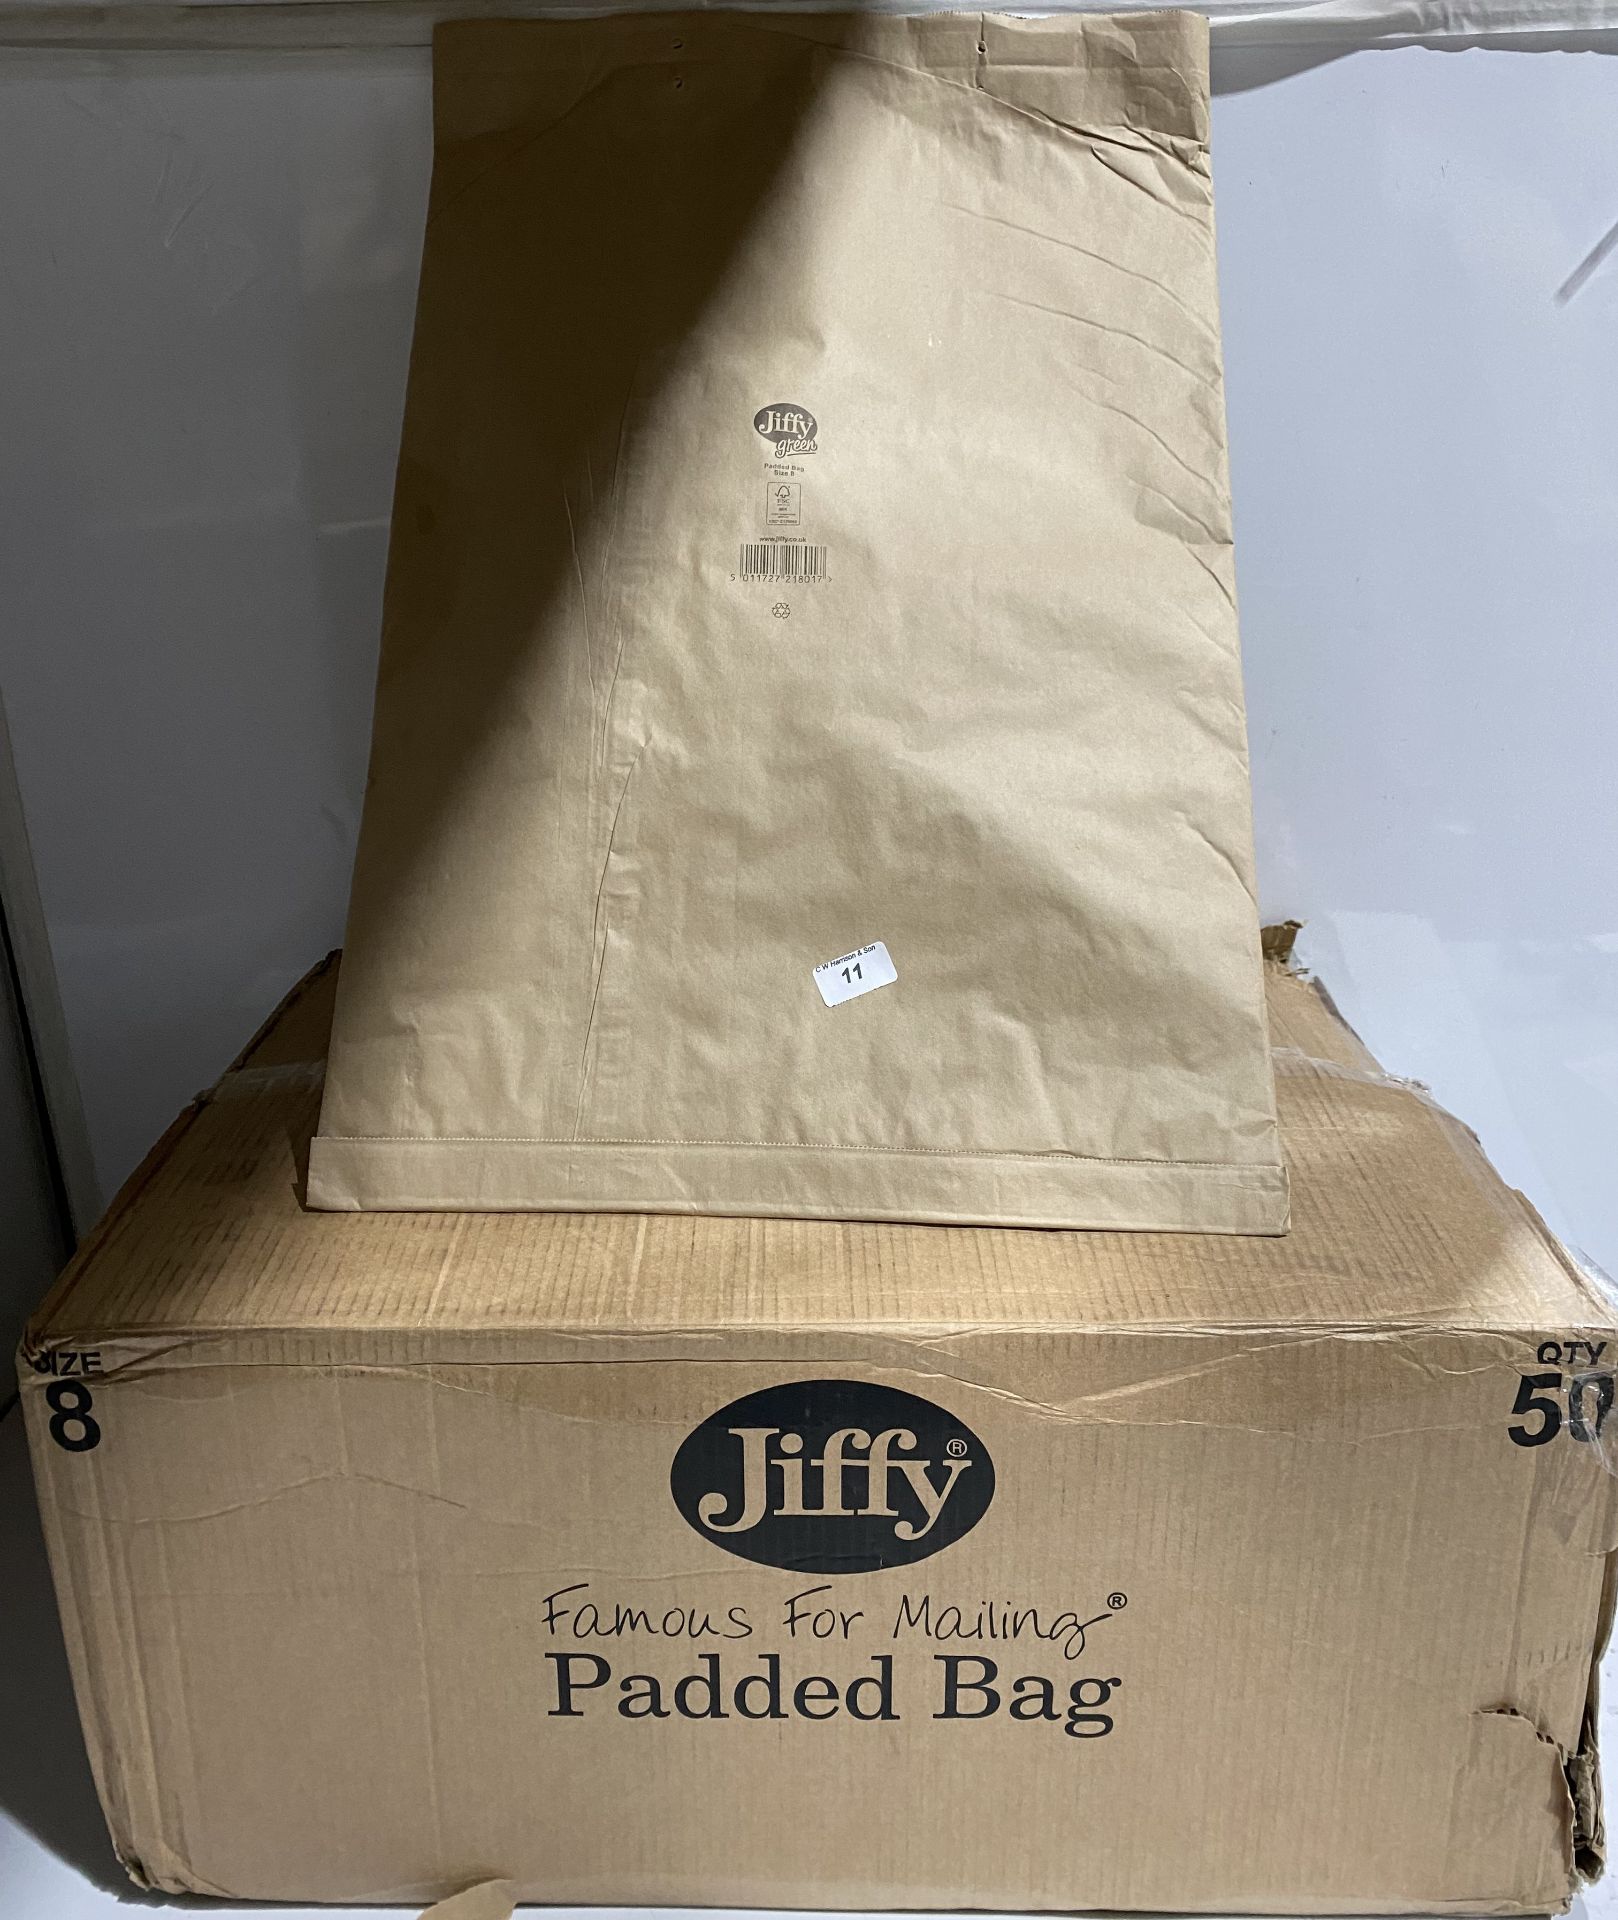 1 x box of 50 size 8 Jiffy padded bags 442x661mm (saleroom location: H11)